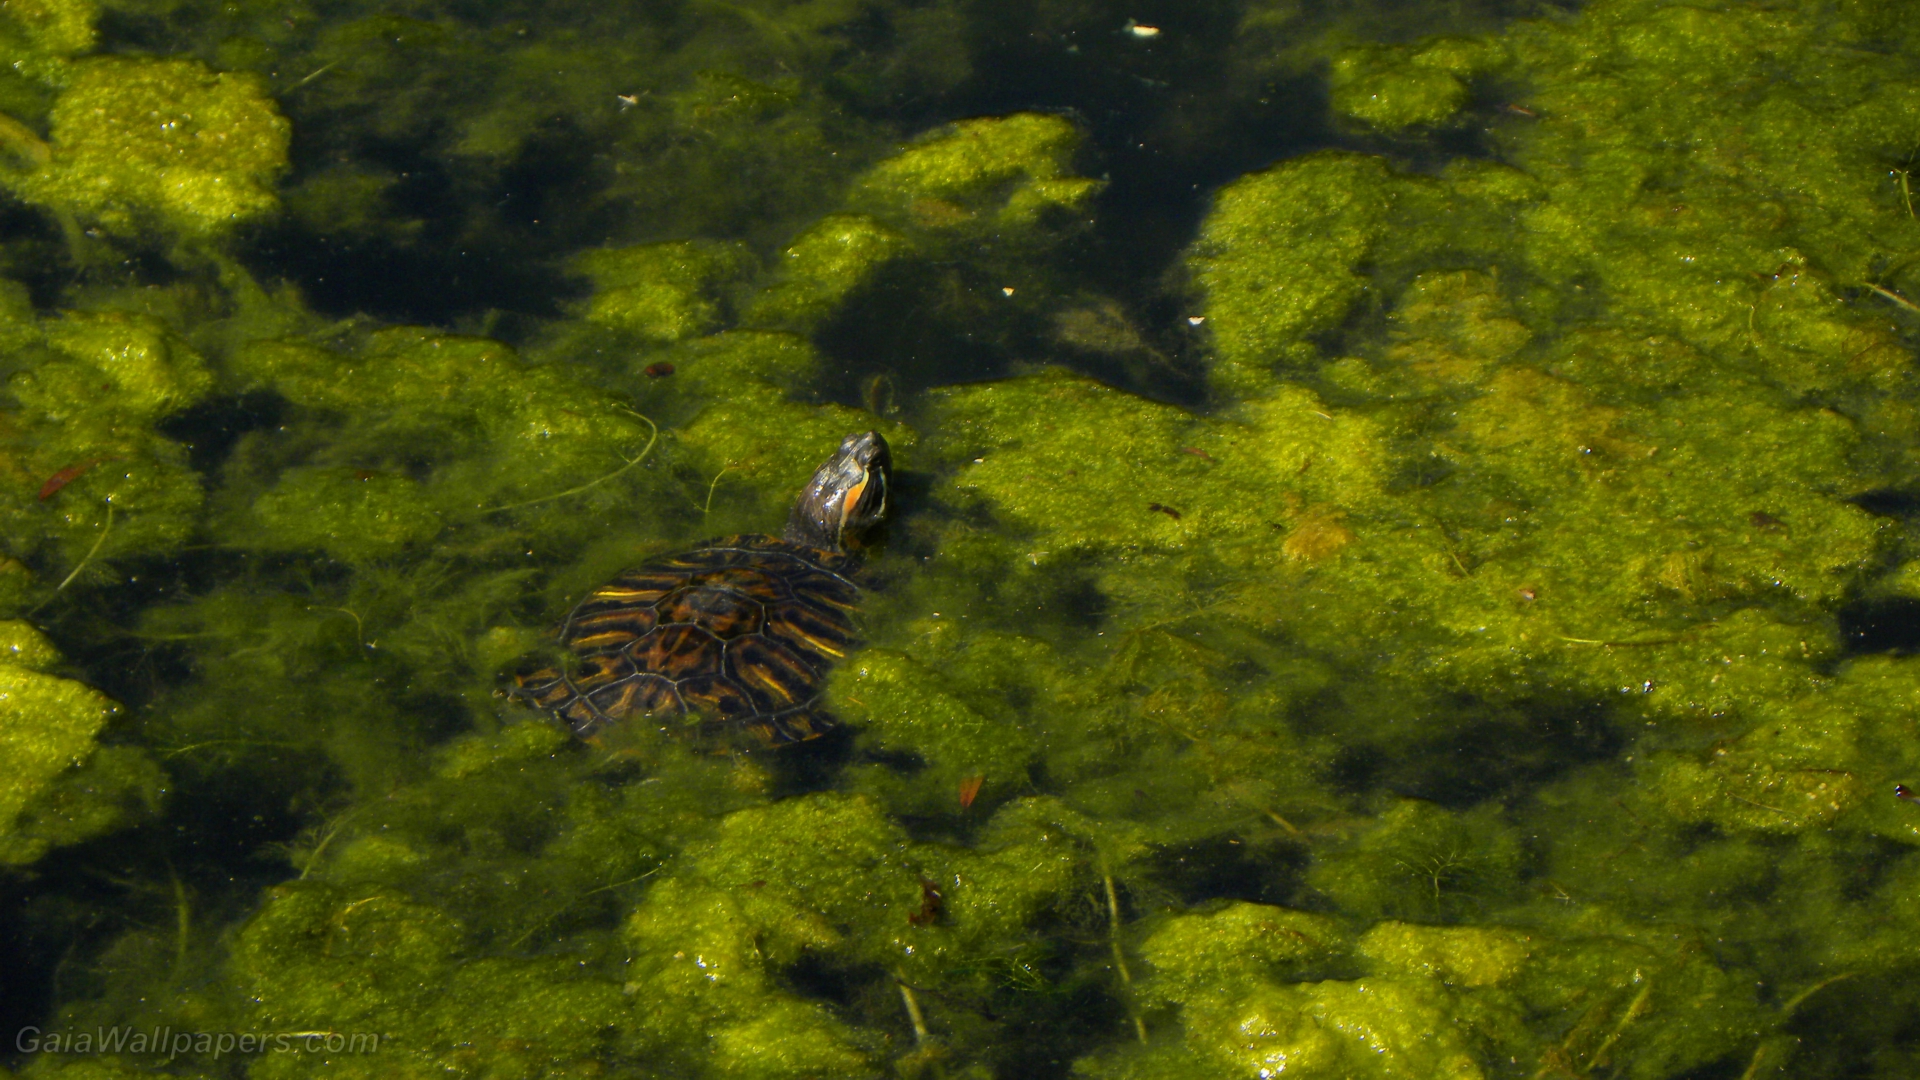 Red-eared slider turtle hidden in the marsh - Free desktop wallpapers